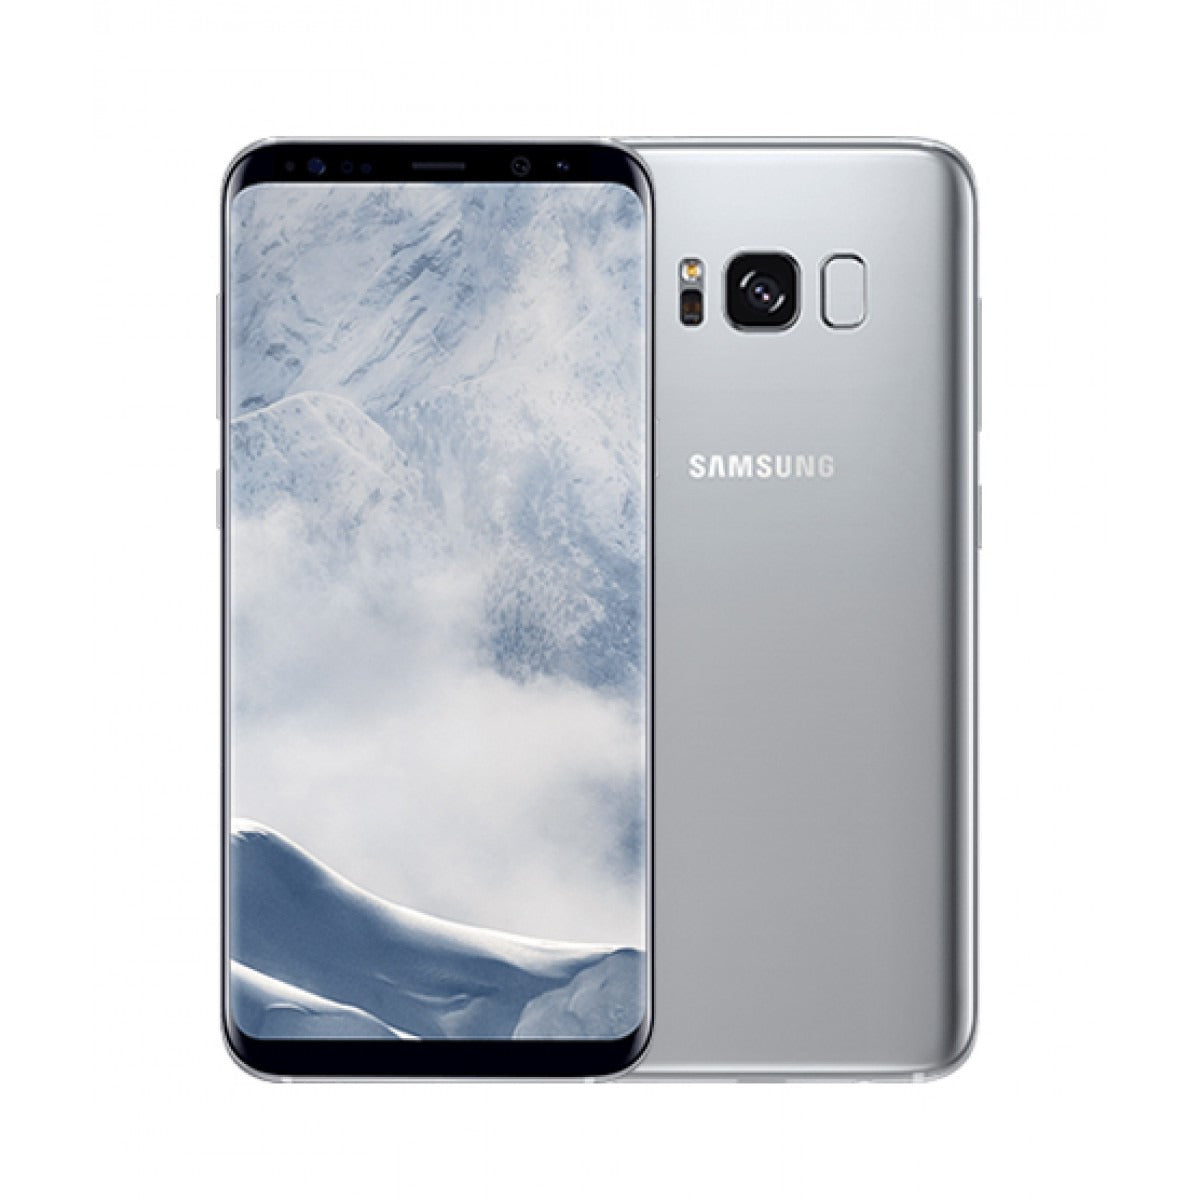 Samsung Galaxy S8 - 64 GB - Arctic Silver - Cricket Wireless